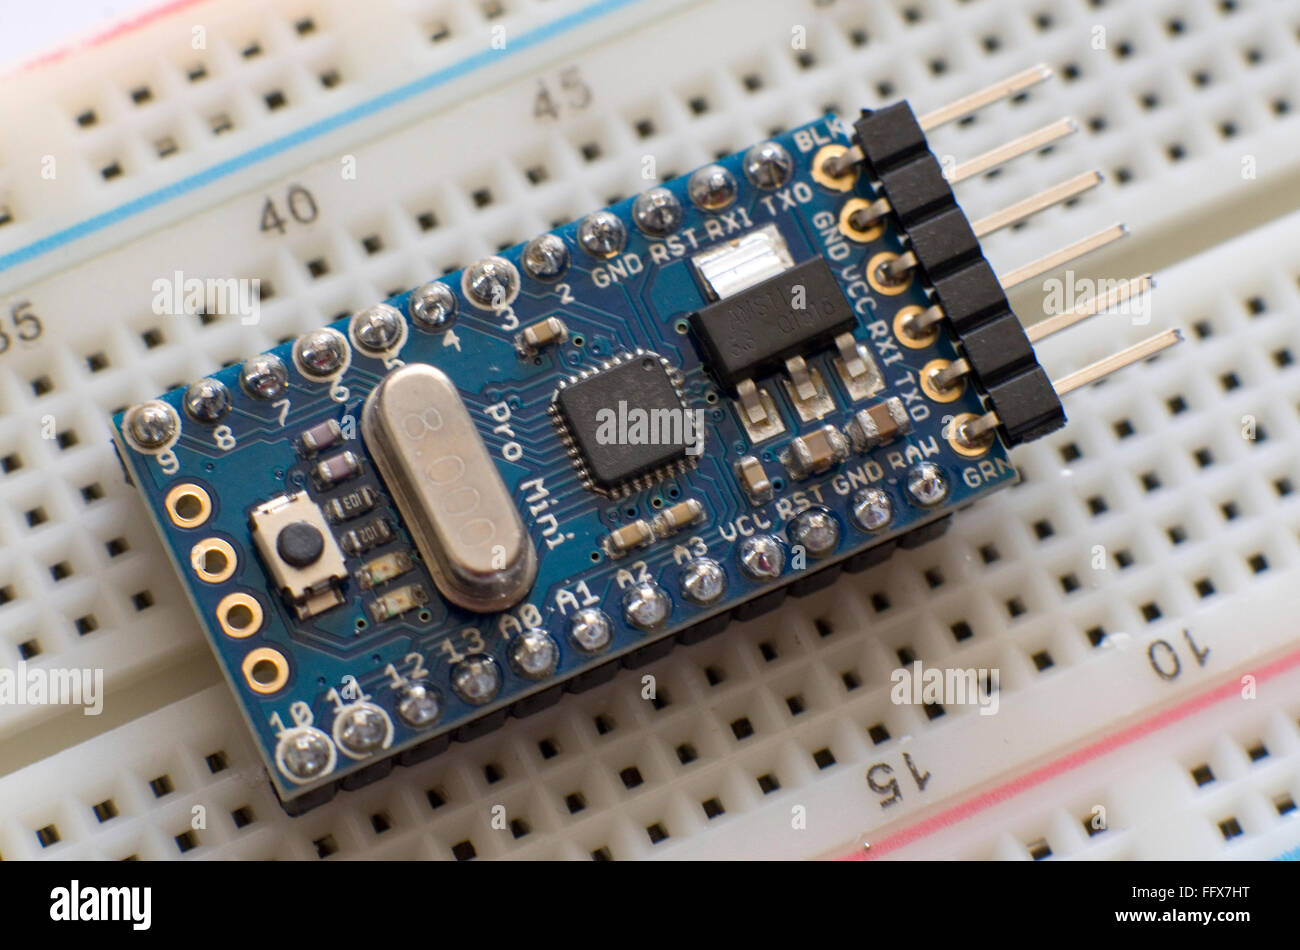 Arduino Pro Mini micro-controller plugged into a breadboard. Stock Photo